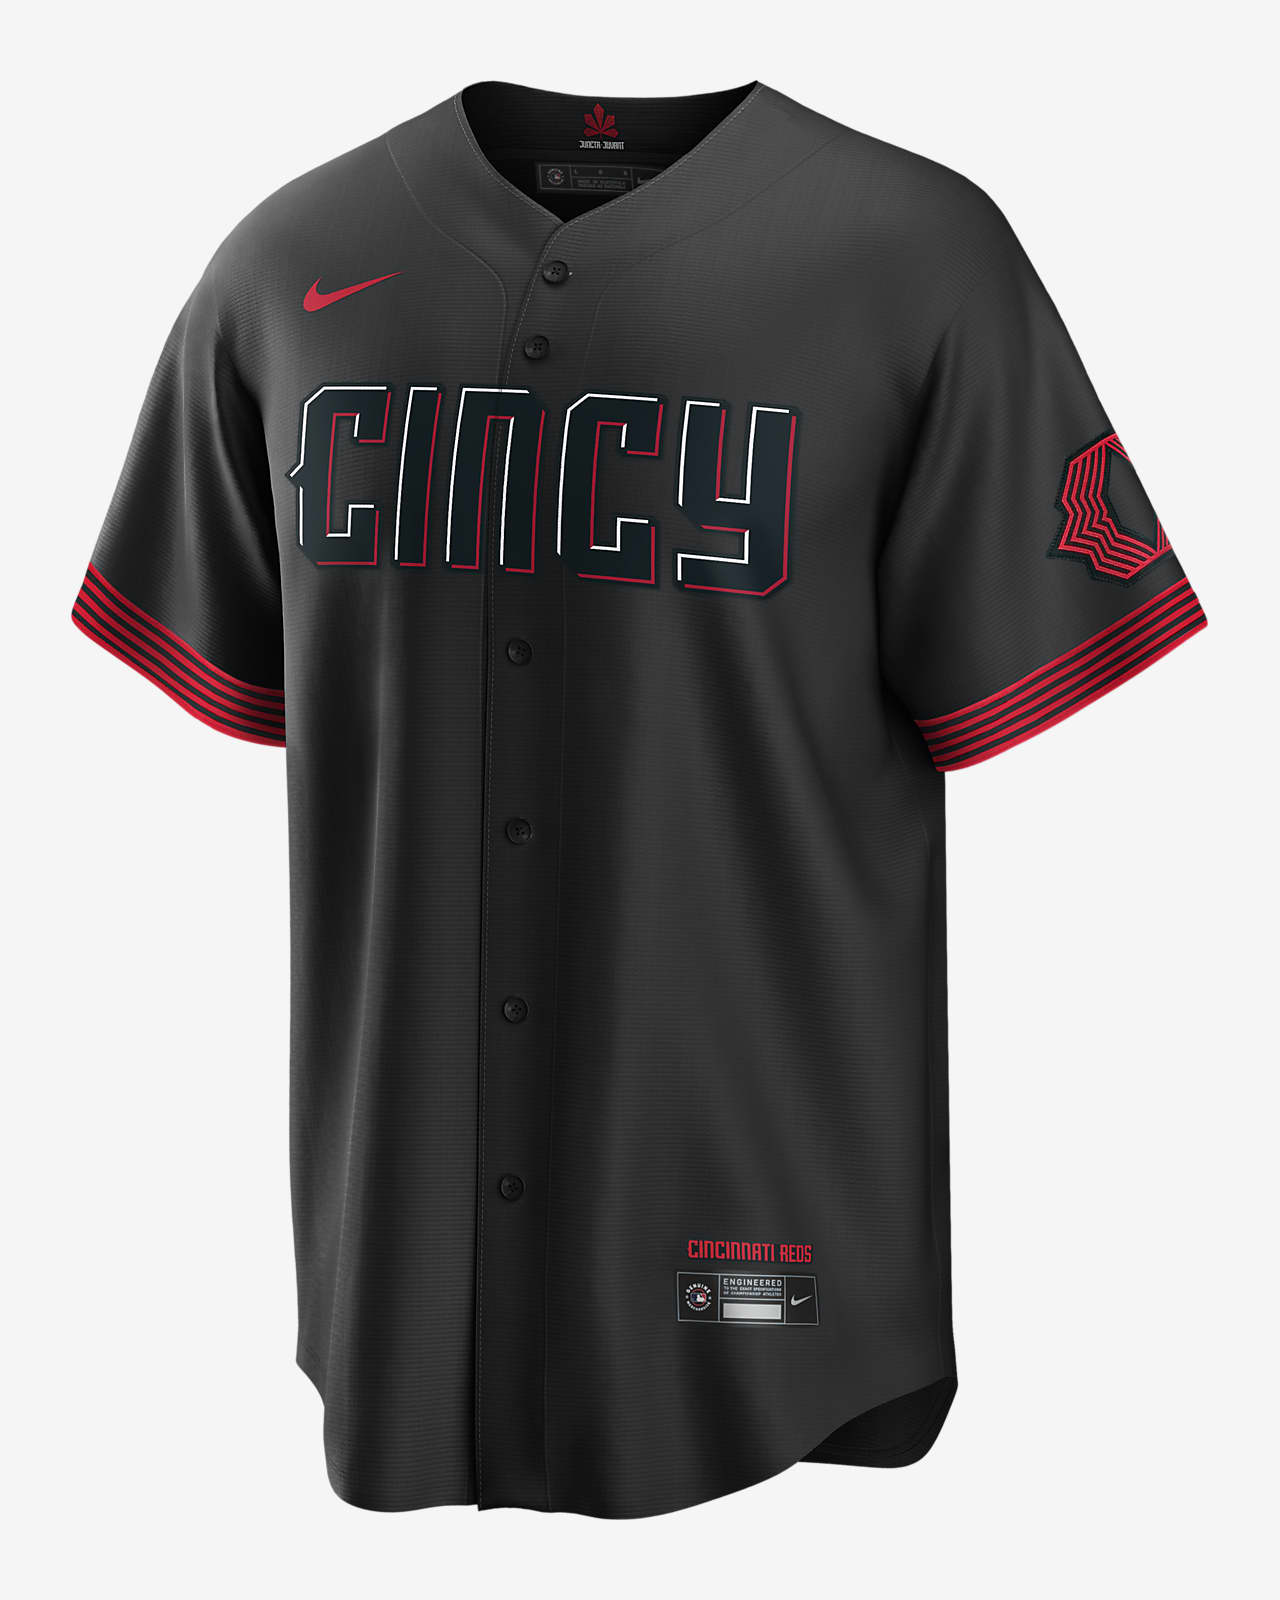 MLB Cincinnati Reds City Connect (Barry Larkin) Men's Replica Baseball  Jersey.